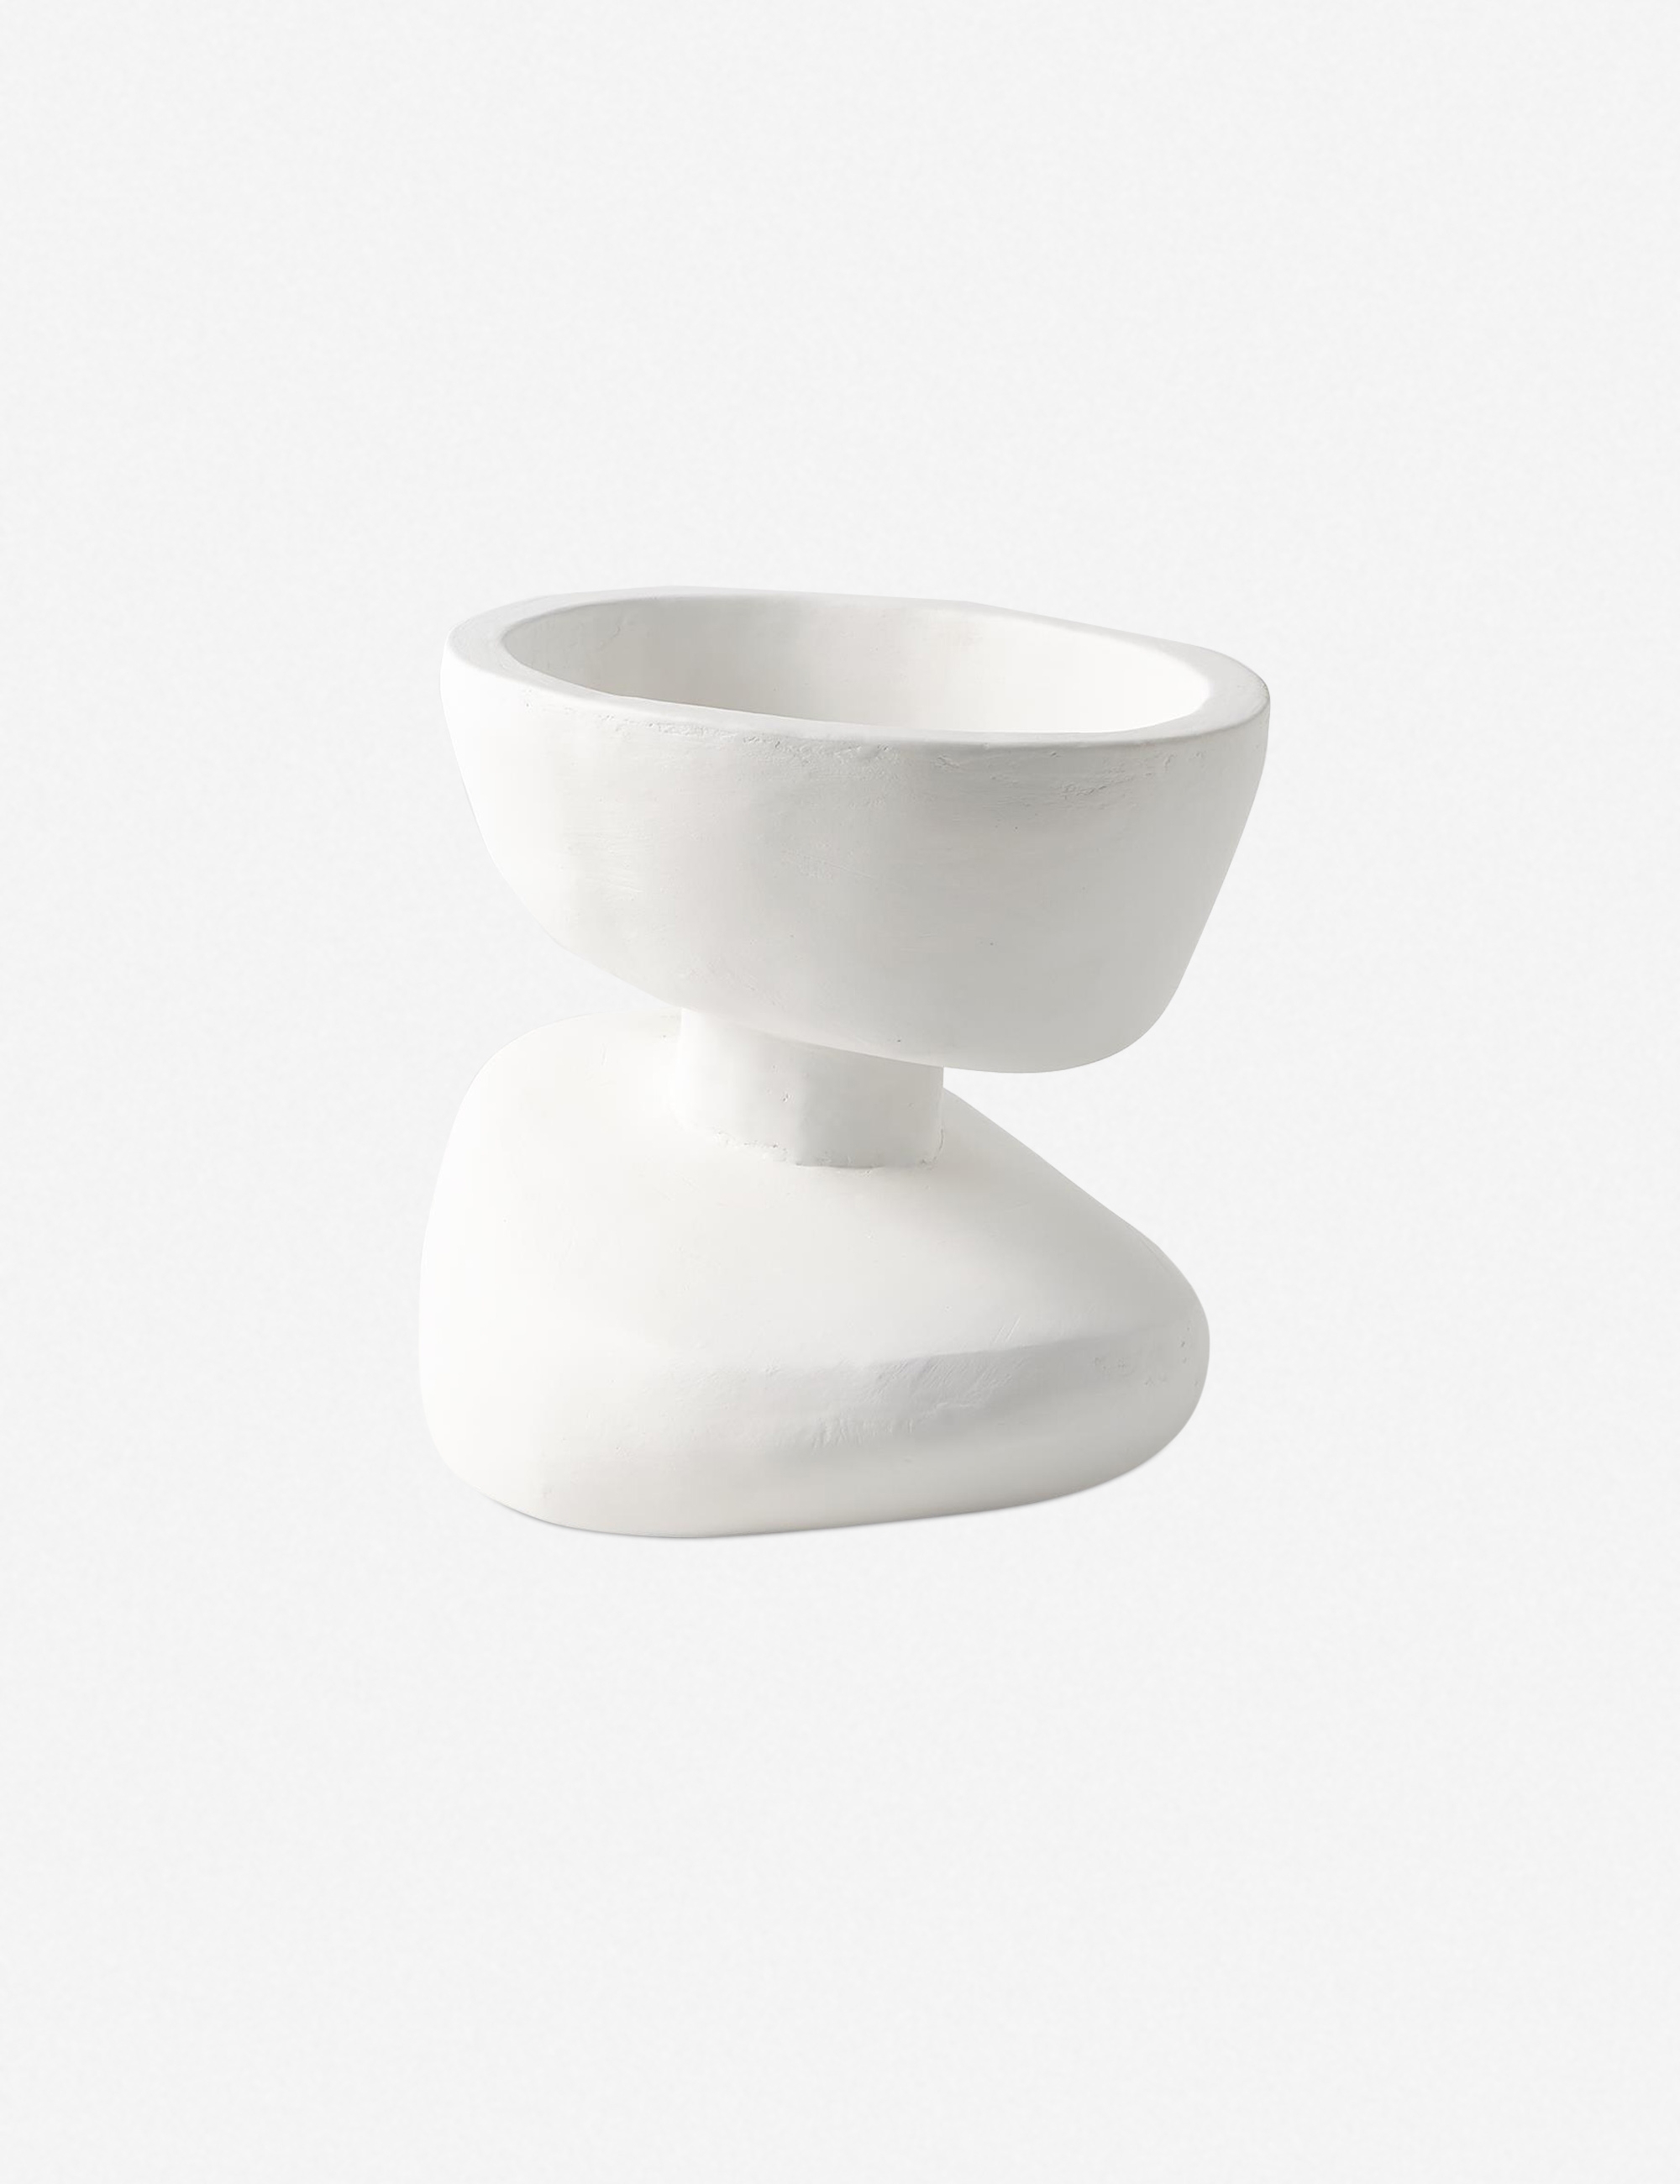 Lemieux et Cie Matili Small Organic Bowl, White - Image 1